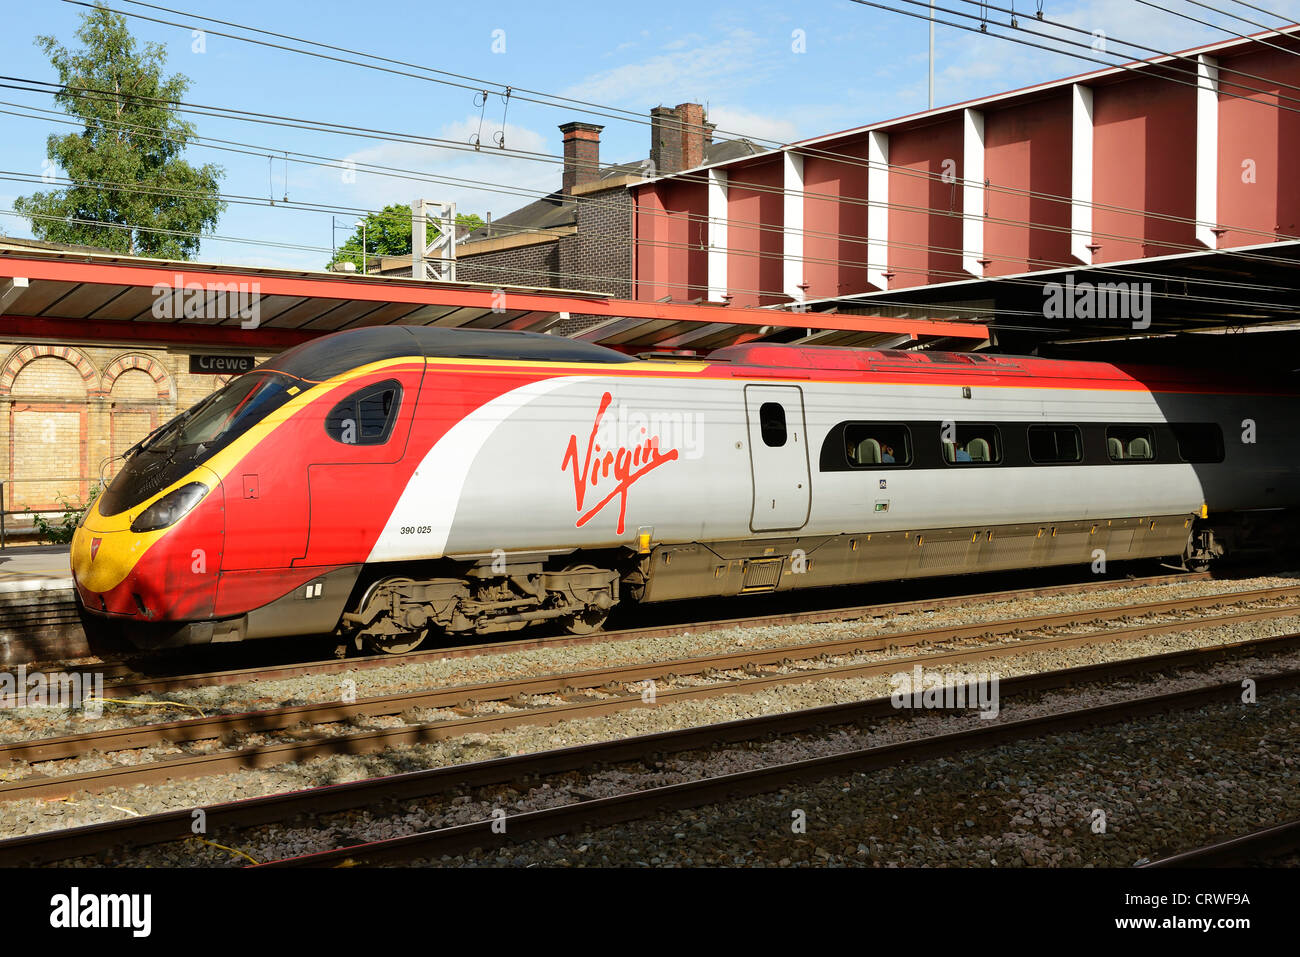 Virgin pendolino train at Crewe station Stock Photo